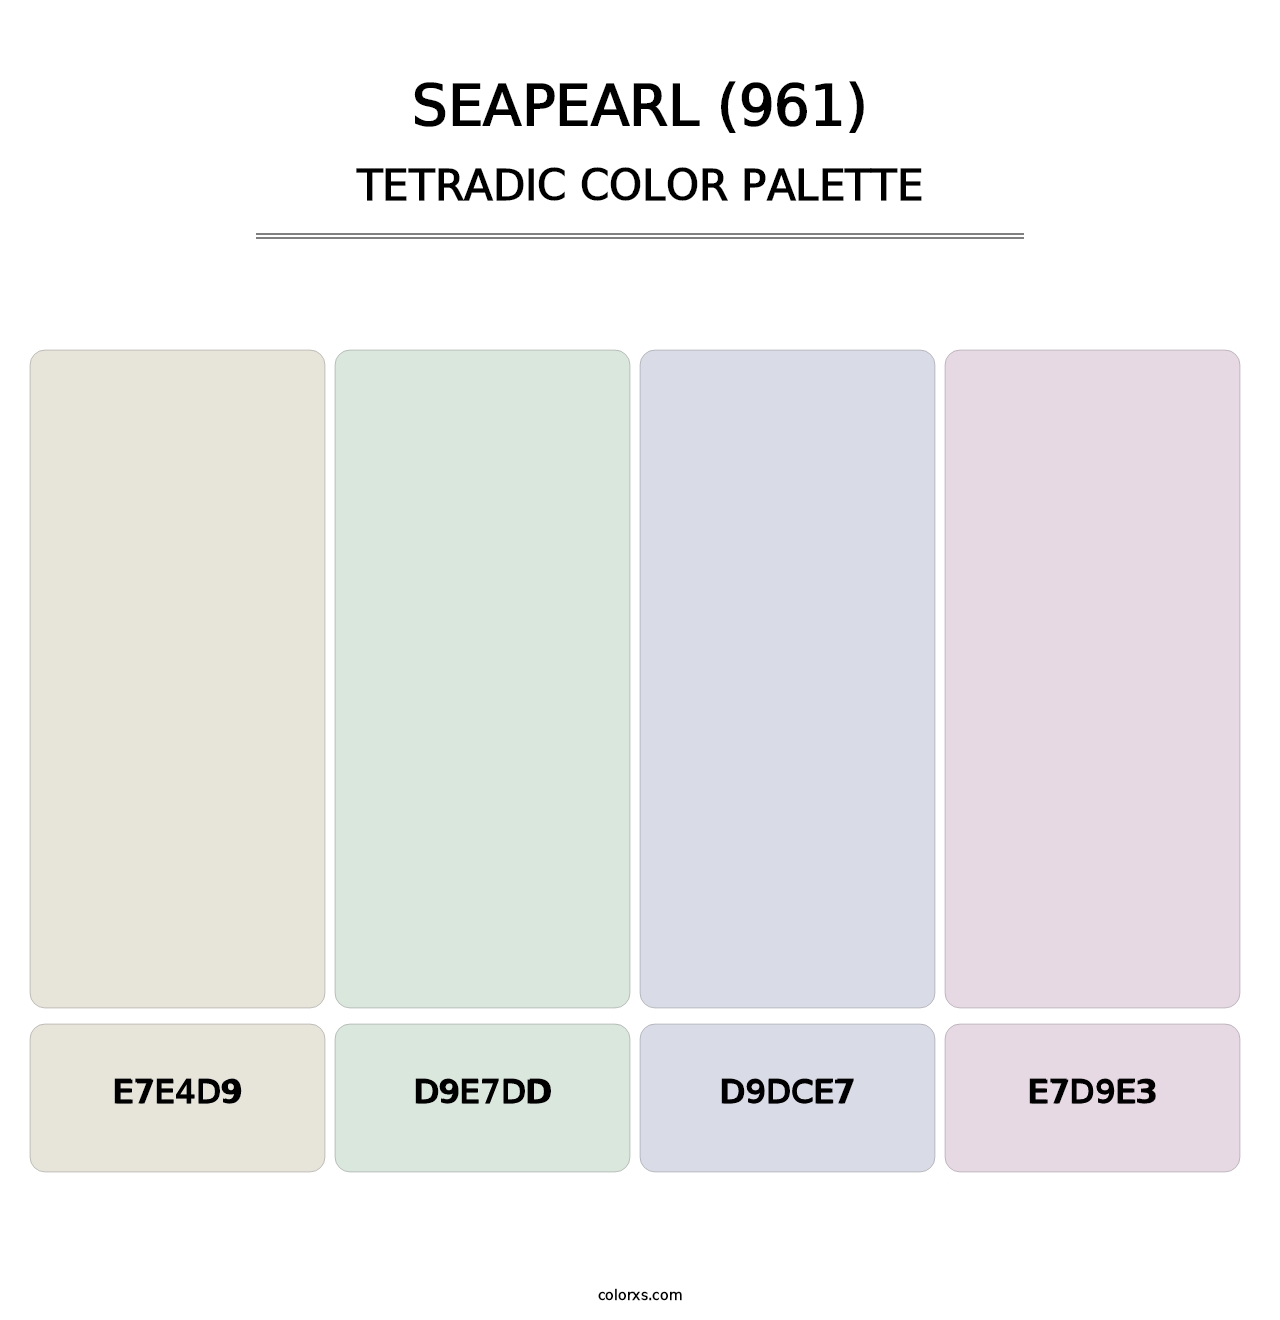 Seapearl (961) - Tetradic Color Palette